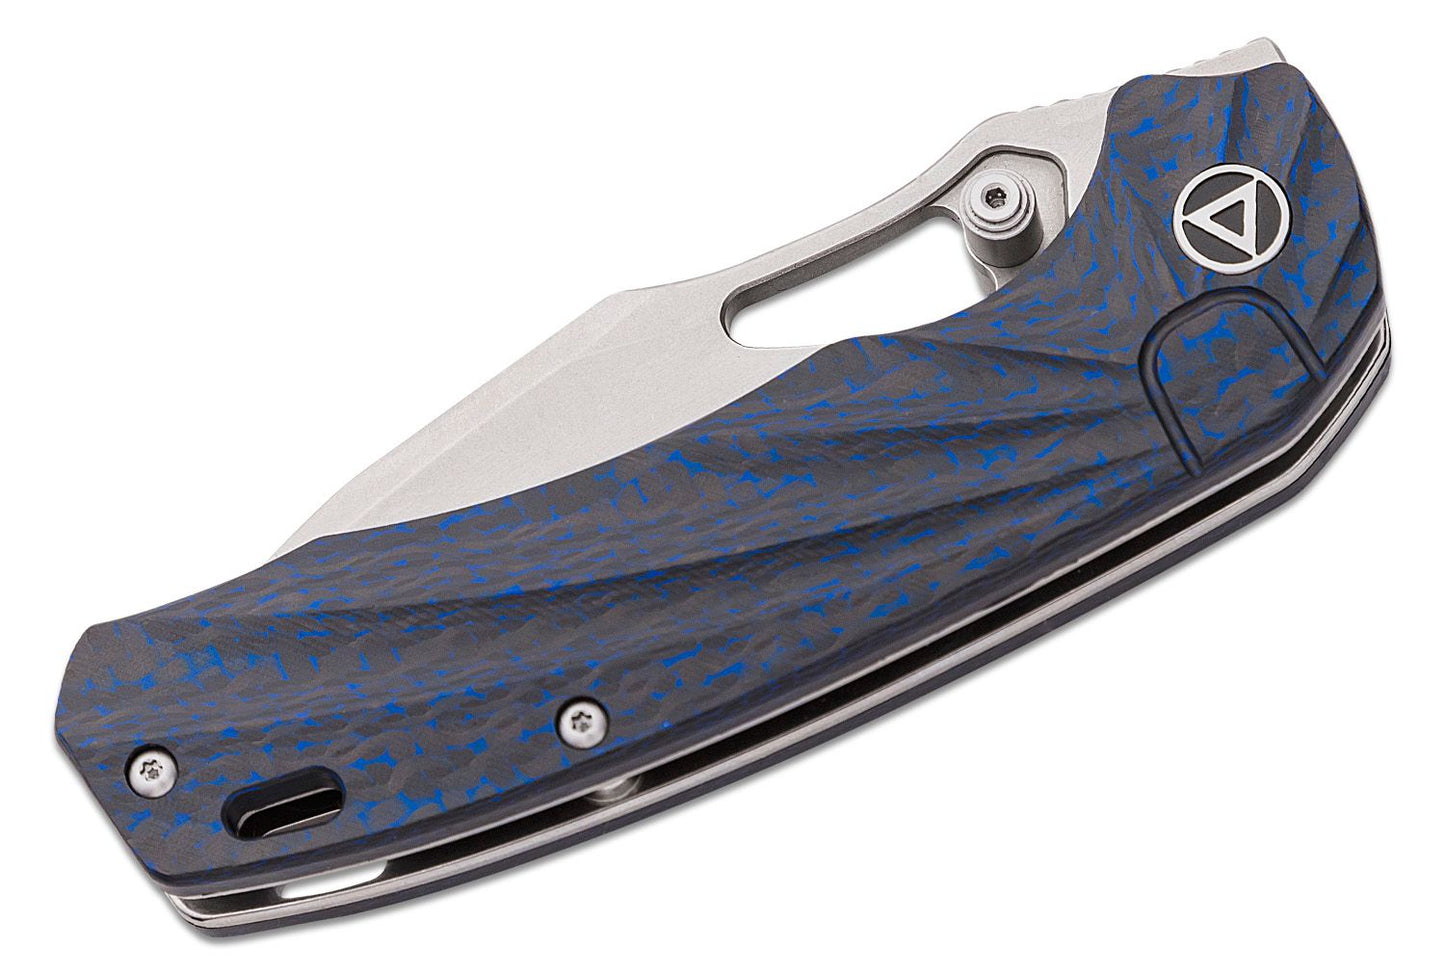 QSP Knives Hornbill Front Flipper Knife 3.25" S35VN Stonewashed Drop Point Blade, Blue Carbon Fiber Handles - QS146-B1 - Sample - Rare